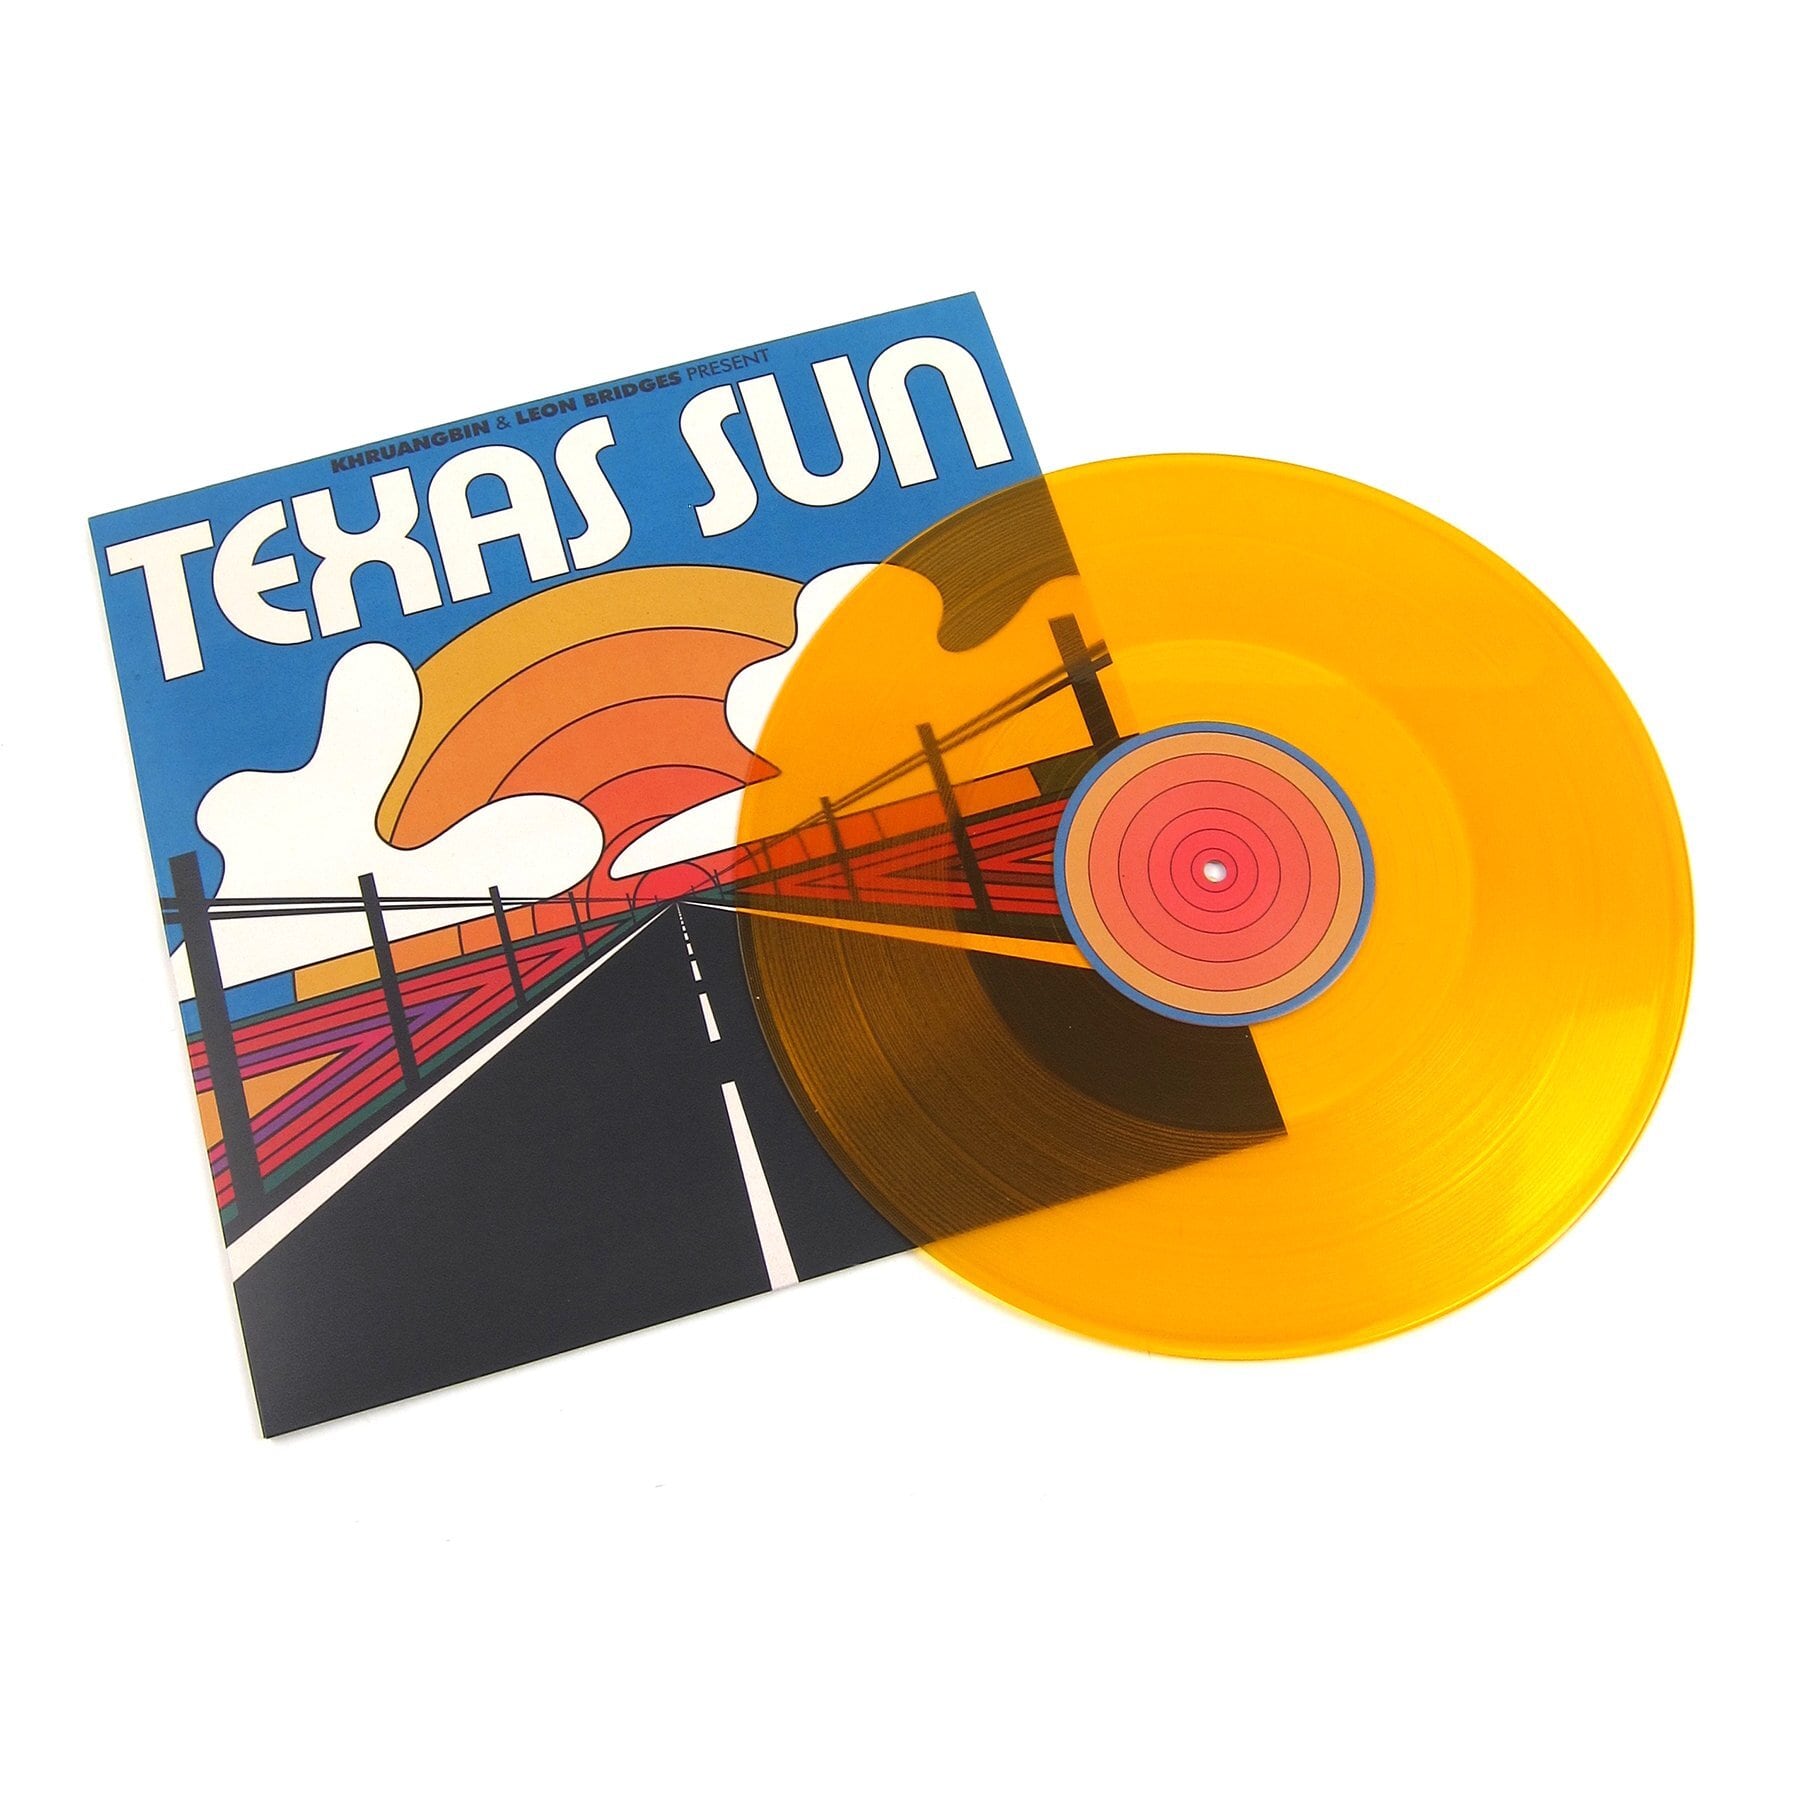 Khruangbin & Leon Bridges / Texas Sun（Ltd 12inch EP）